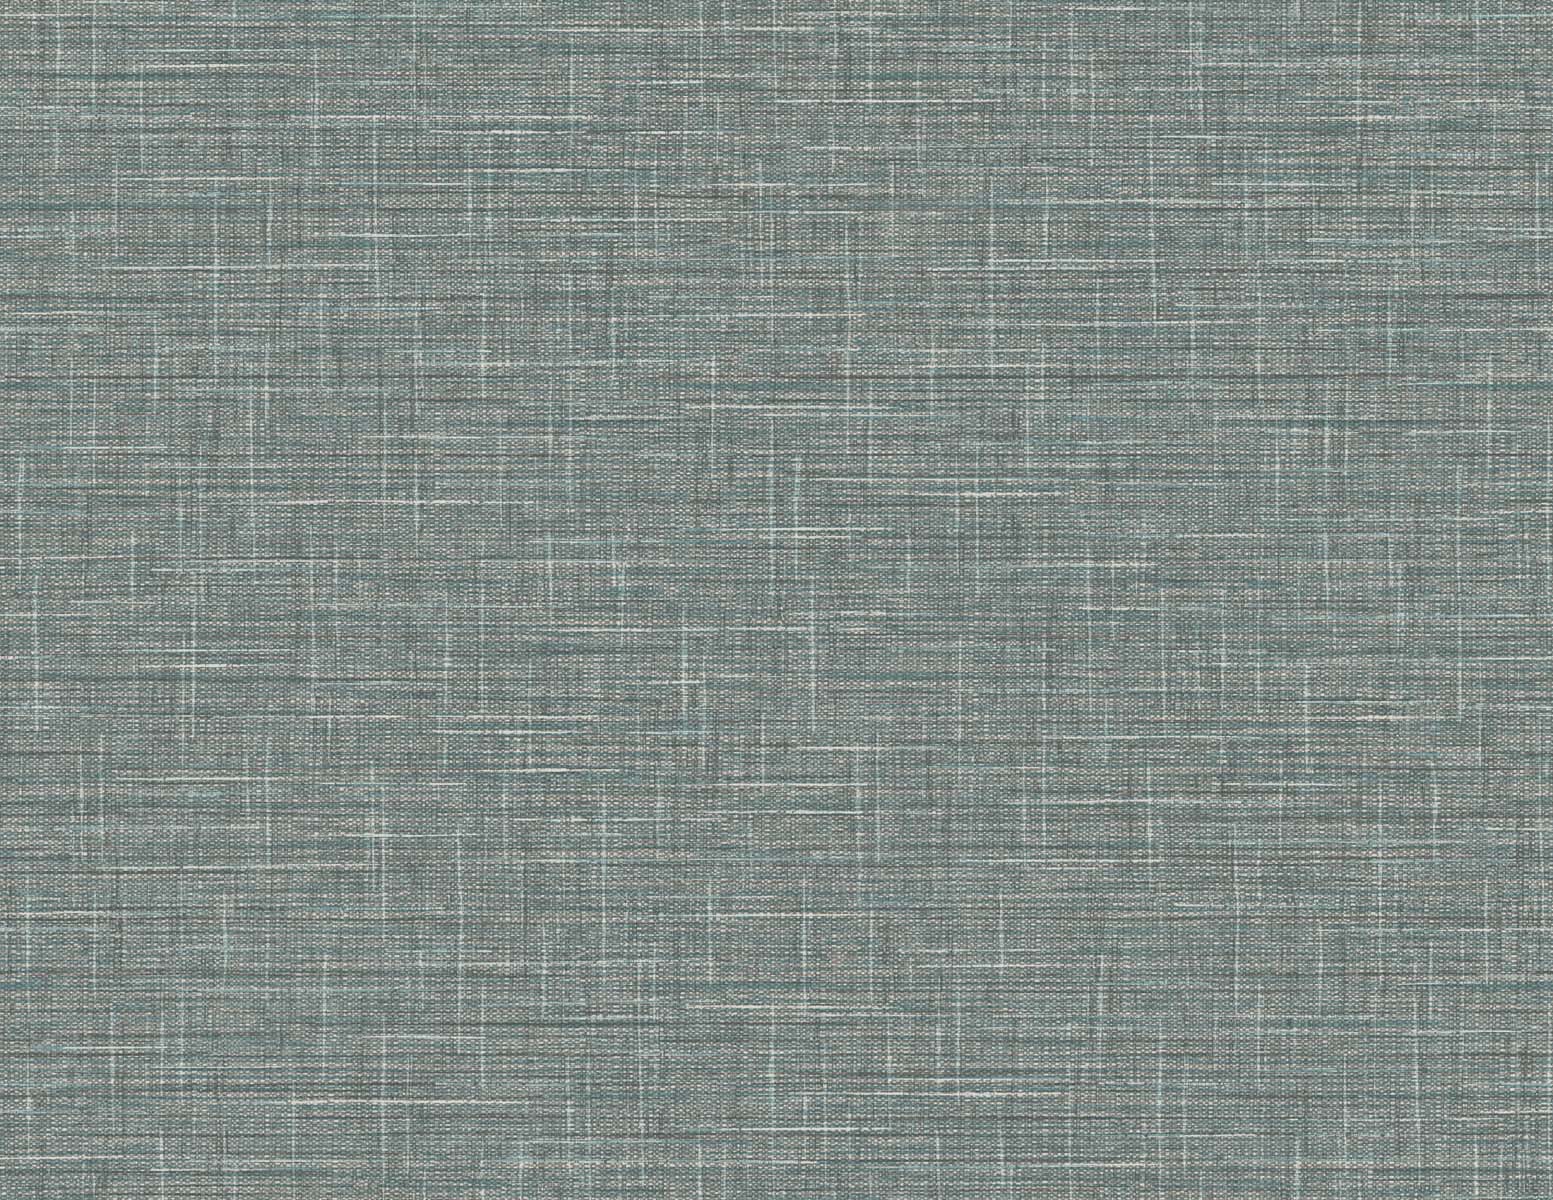 DuPont TG60137 Tedlar Textures Grasmere Weave Embossed Vinyl  Wallpaper Dark Linen